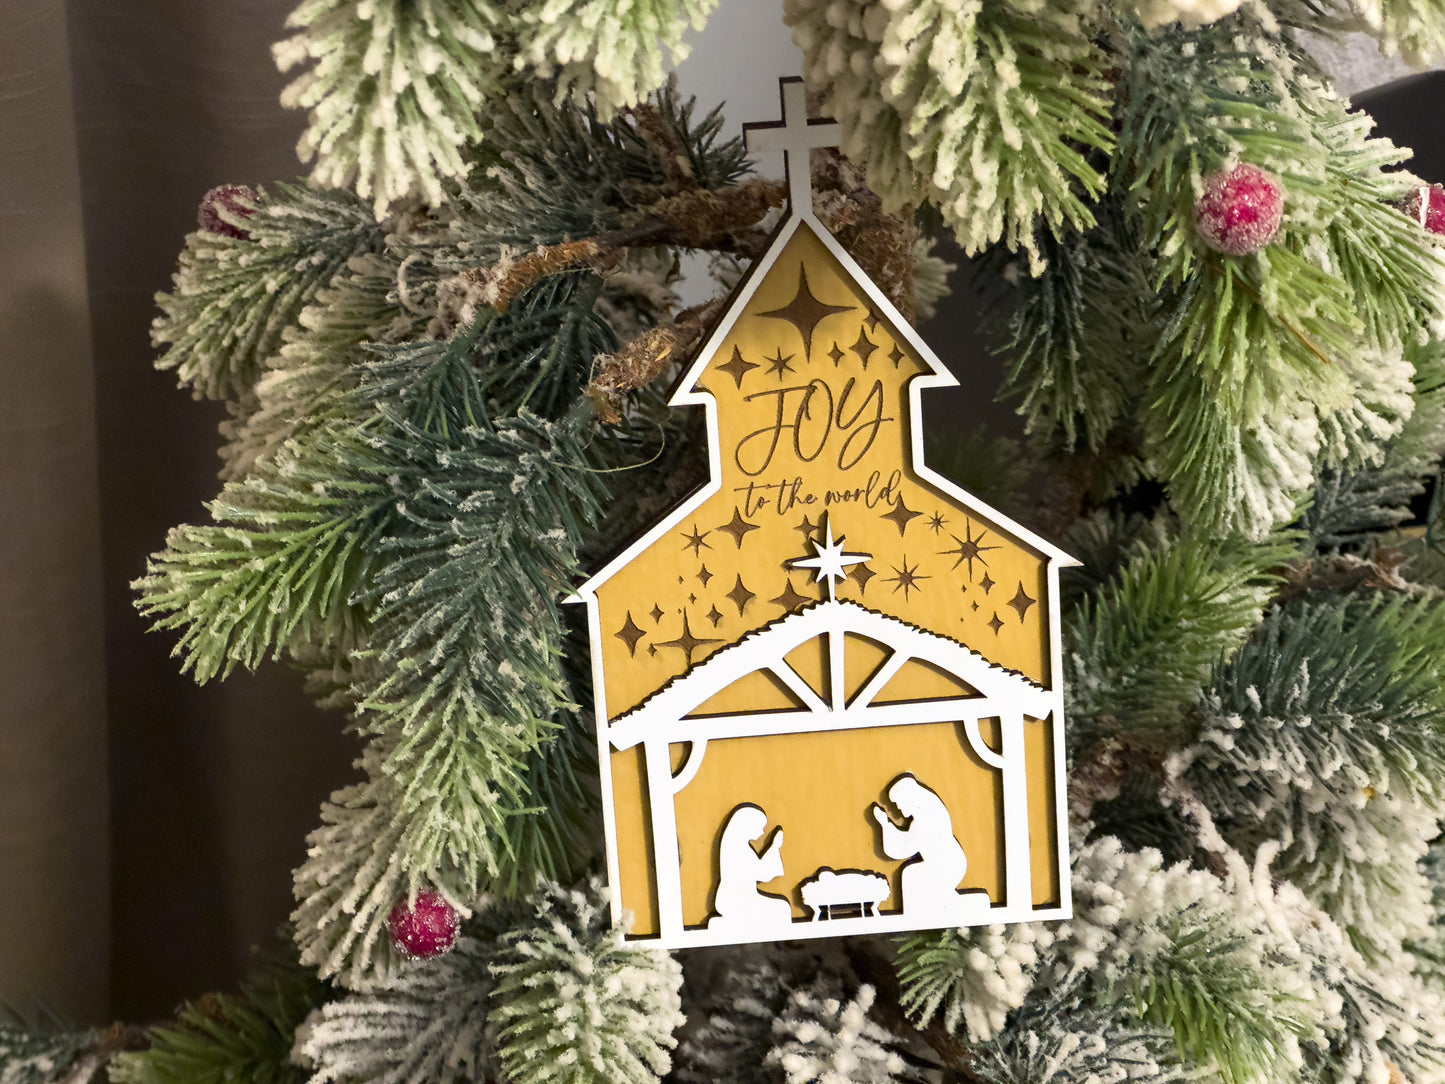 Nativity Scene in Church Christmas Ornament